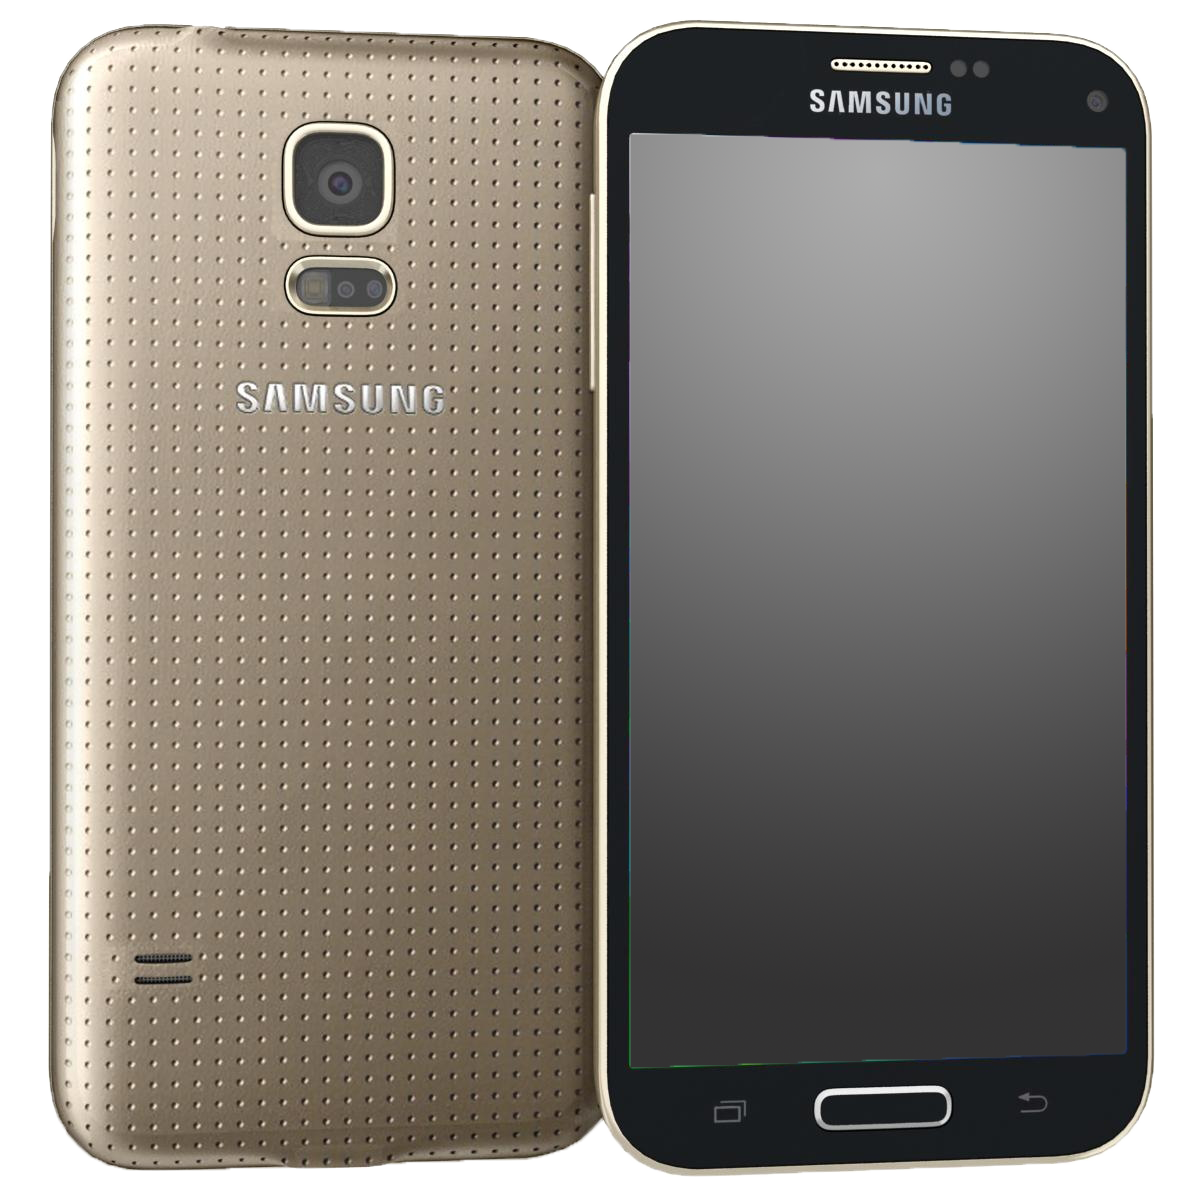 Samsung Galaxy S5 mini G800F gold - Ohne Vertrag